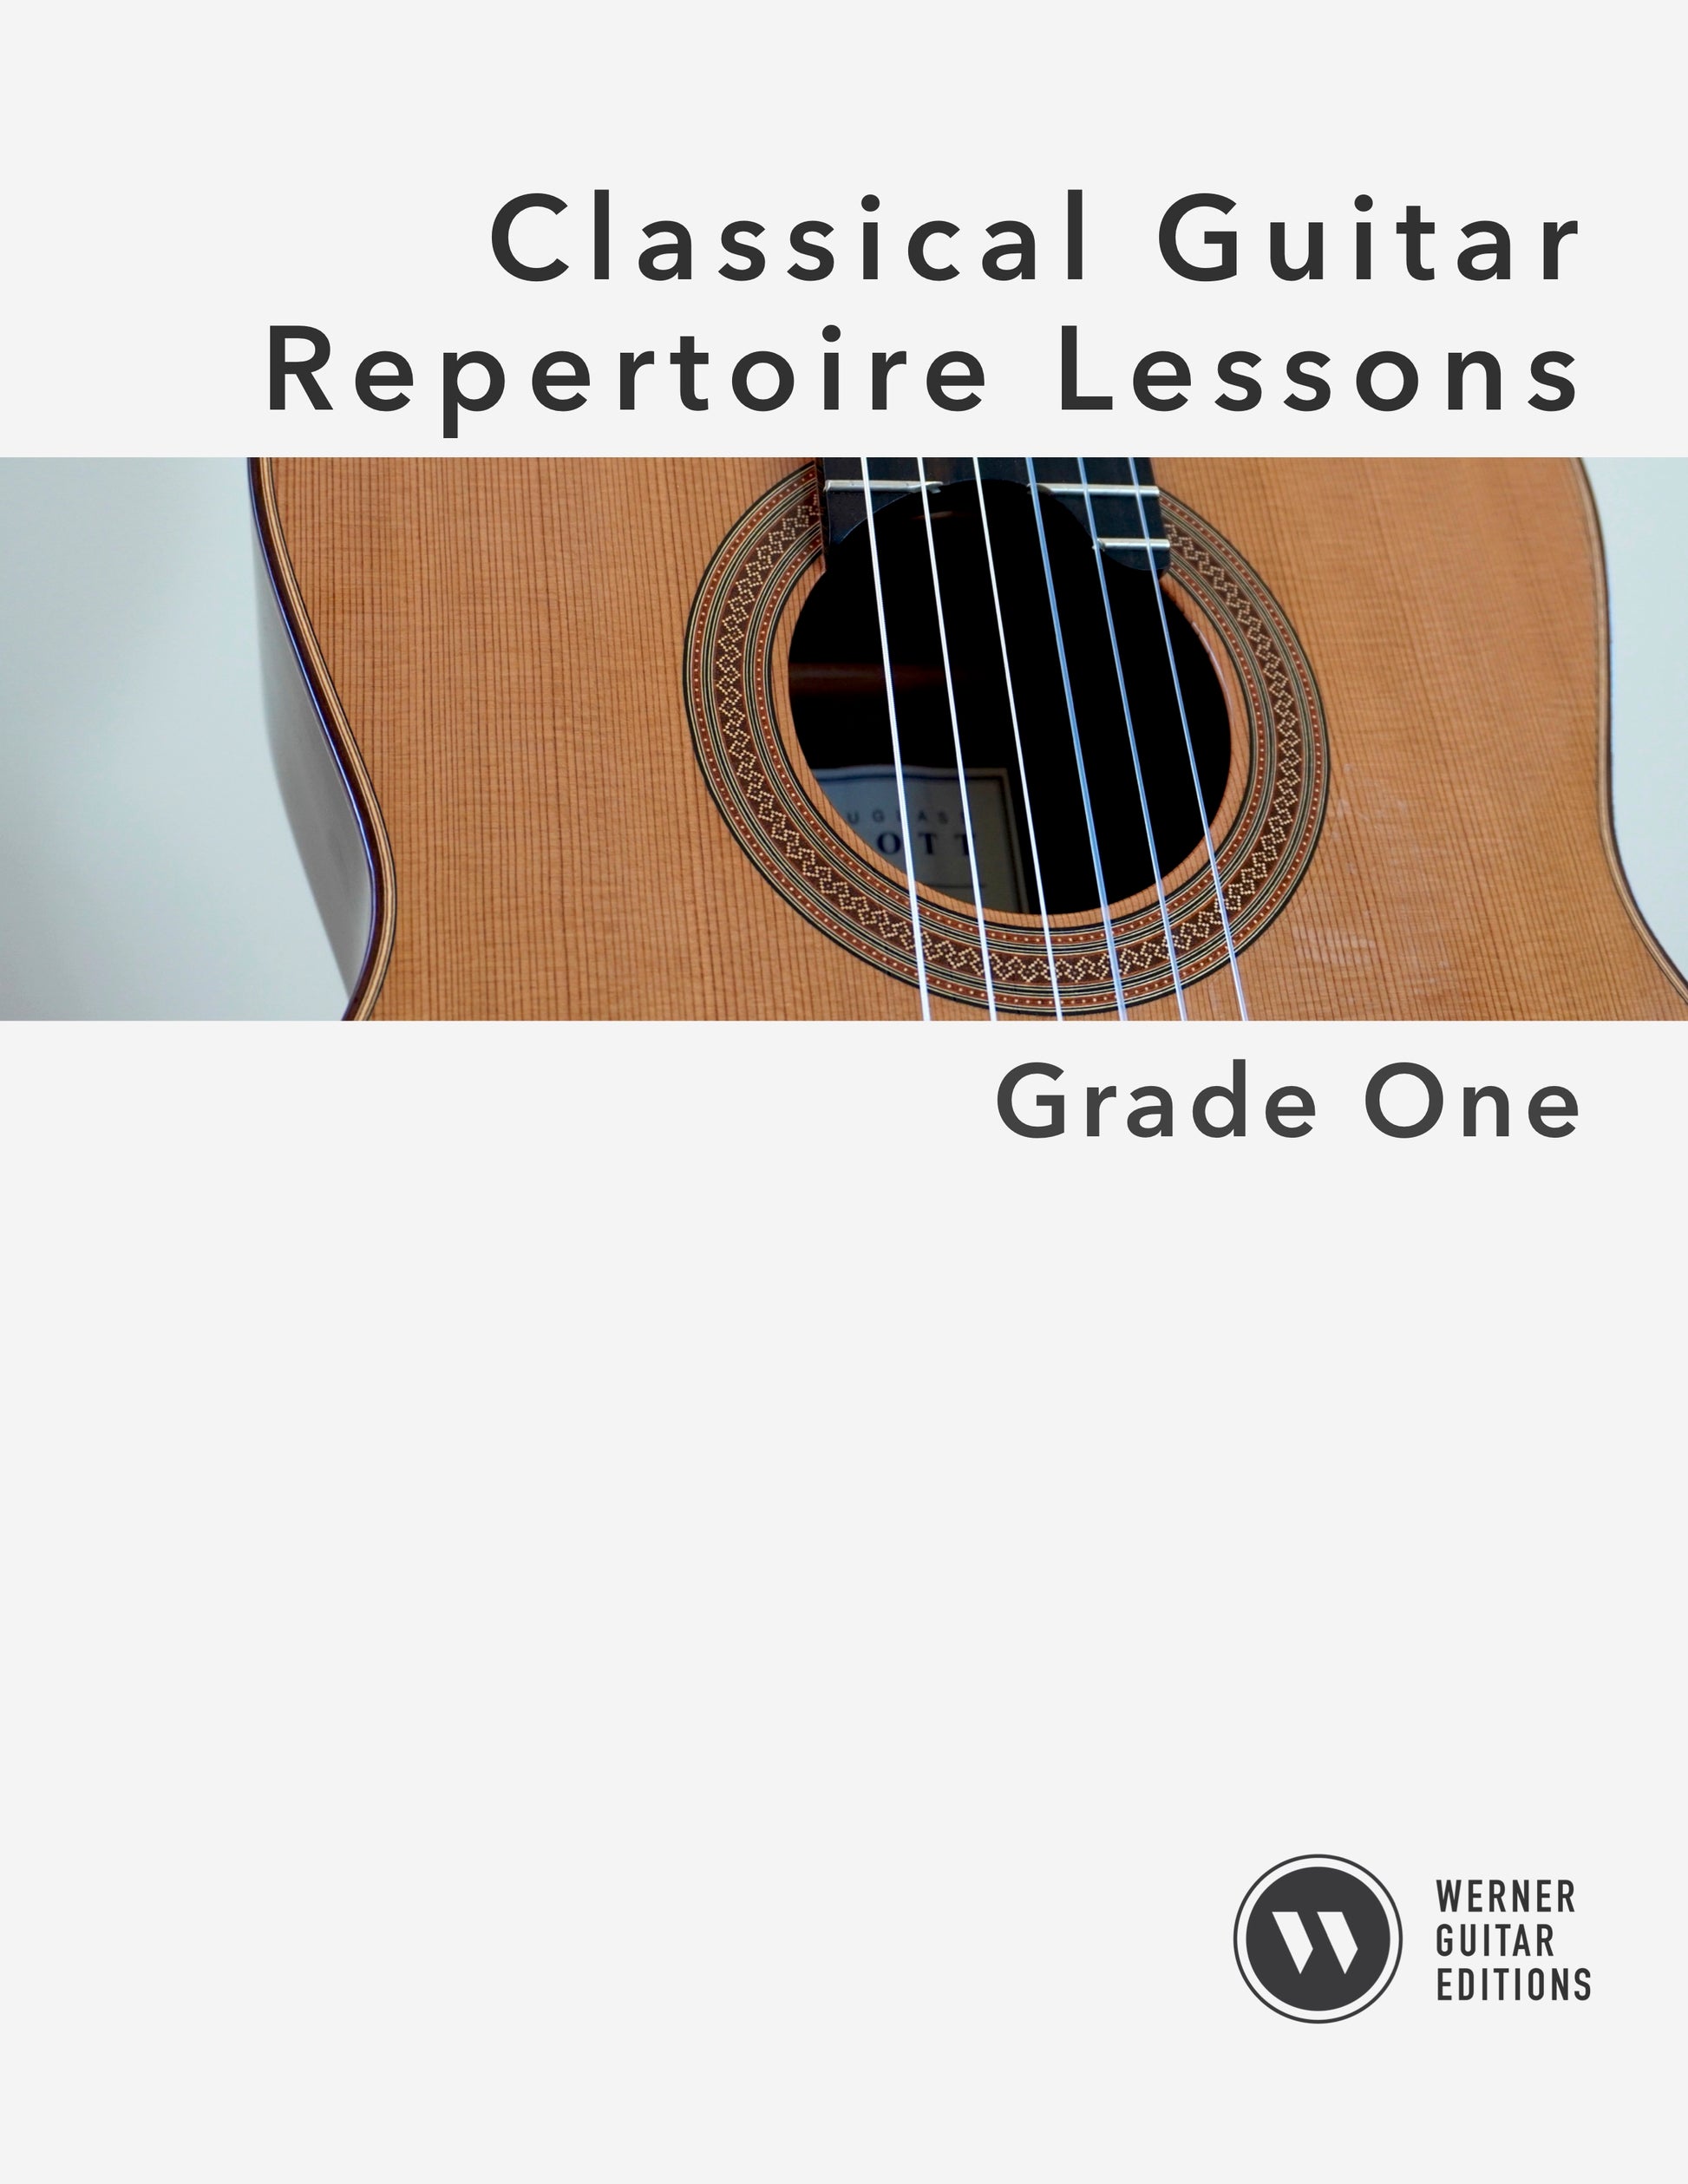 Classical Guitar Repertoire Lessons Grade 1